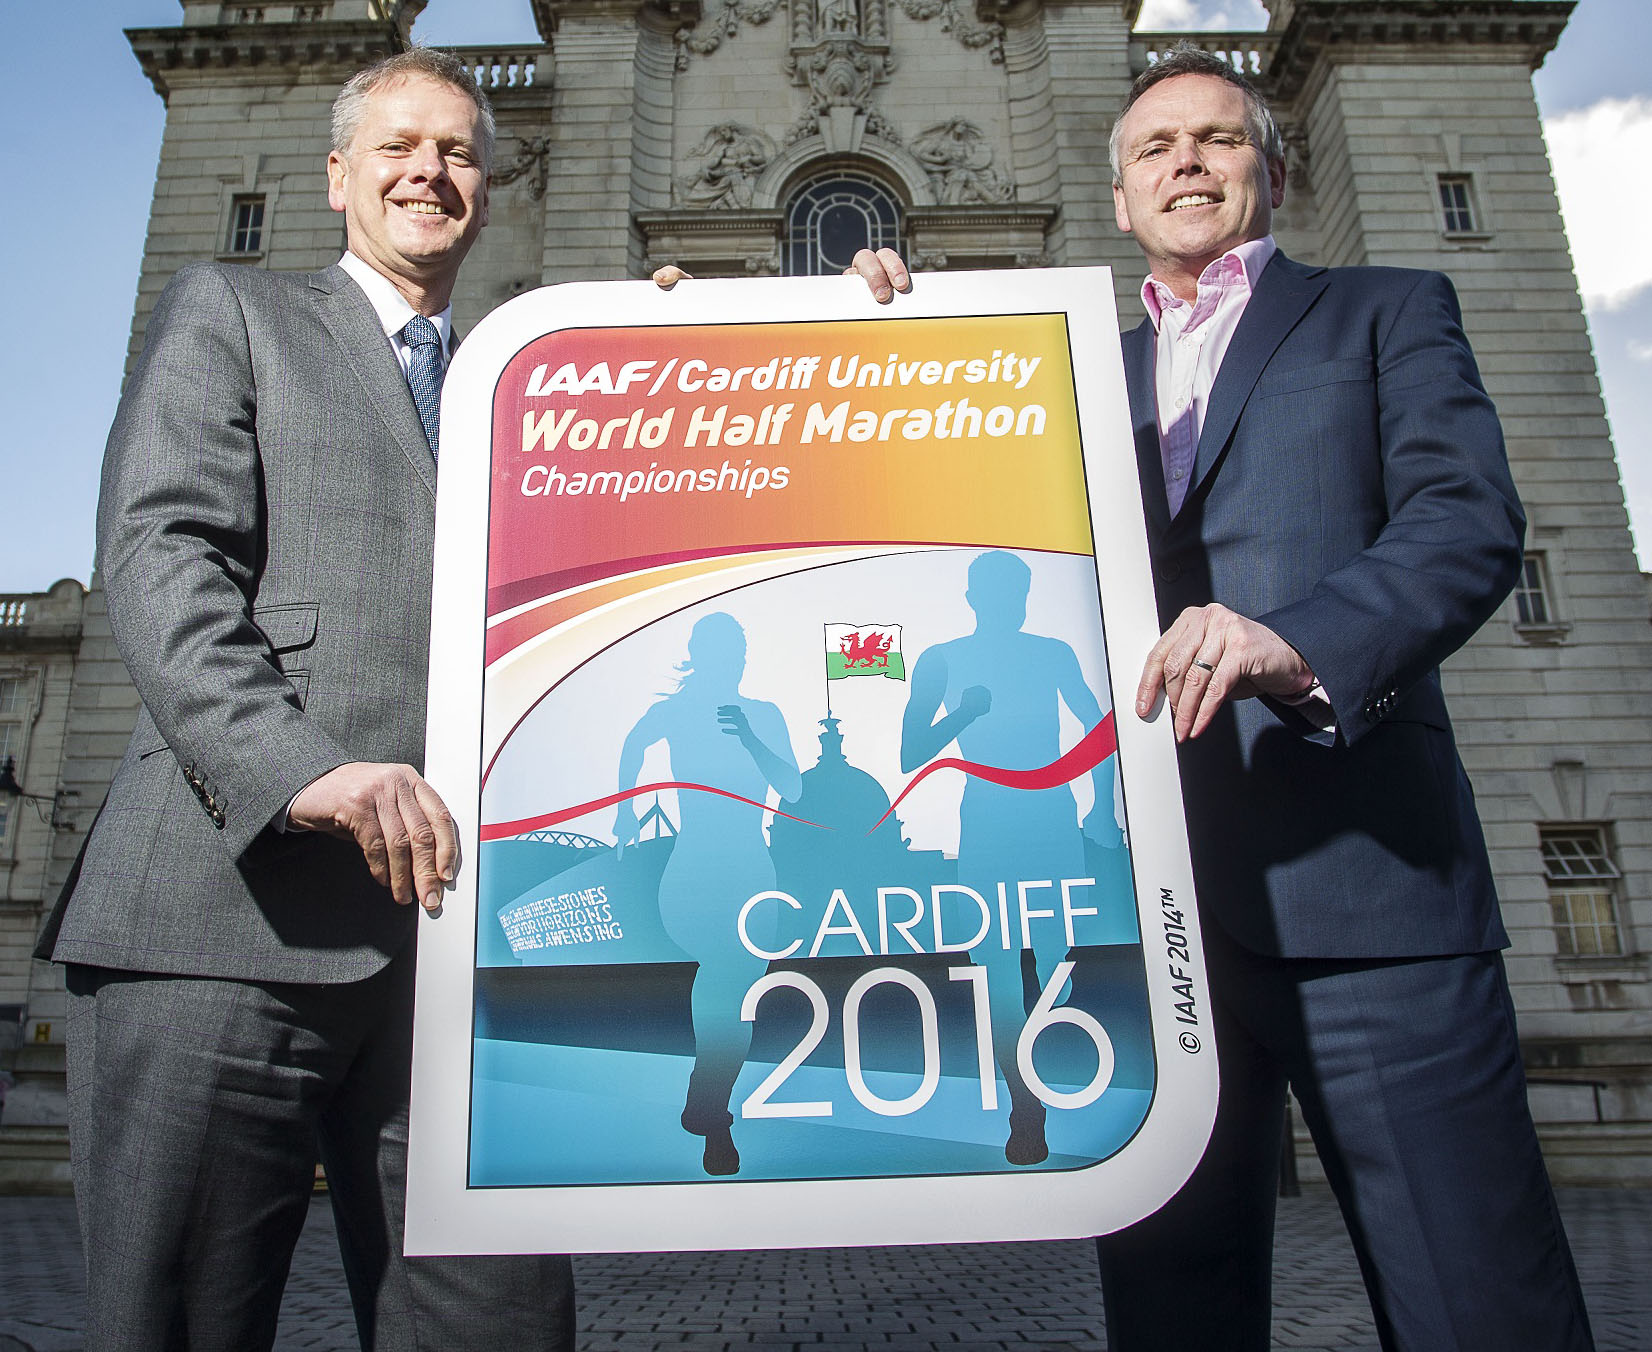 Iaaf cardiff university world half marathon championships 